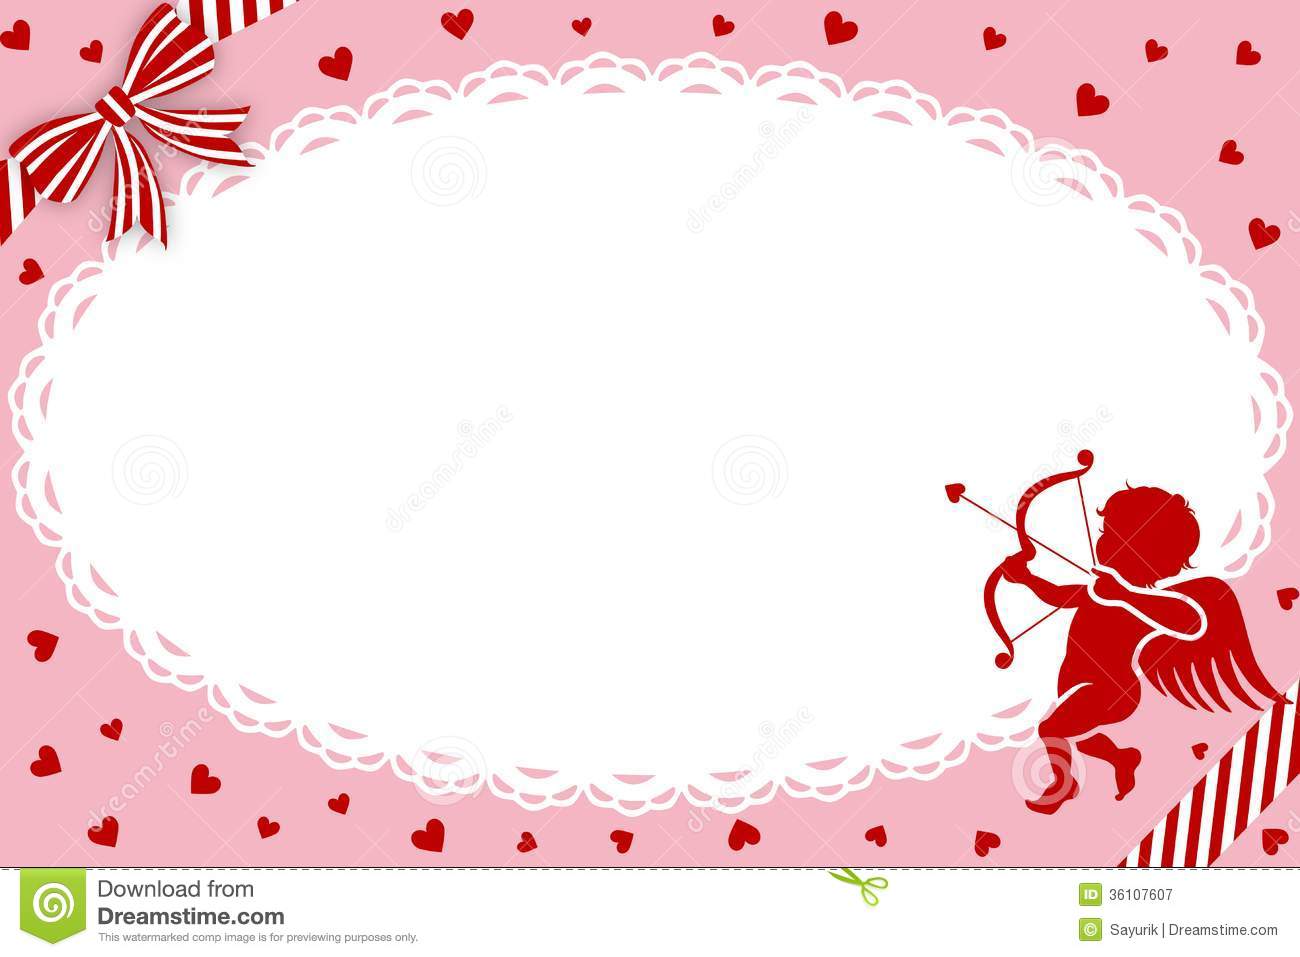 Valentine Cupid 33 Free Wallpaper Hdlovewall Com Images, Photos, Reviews